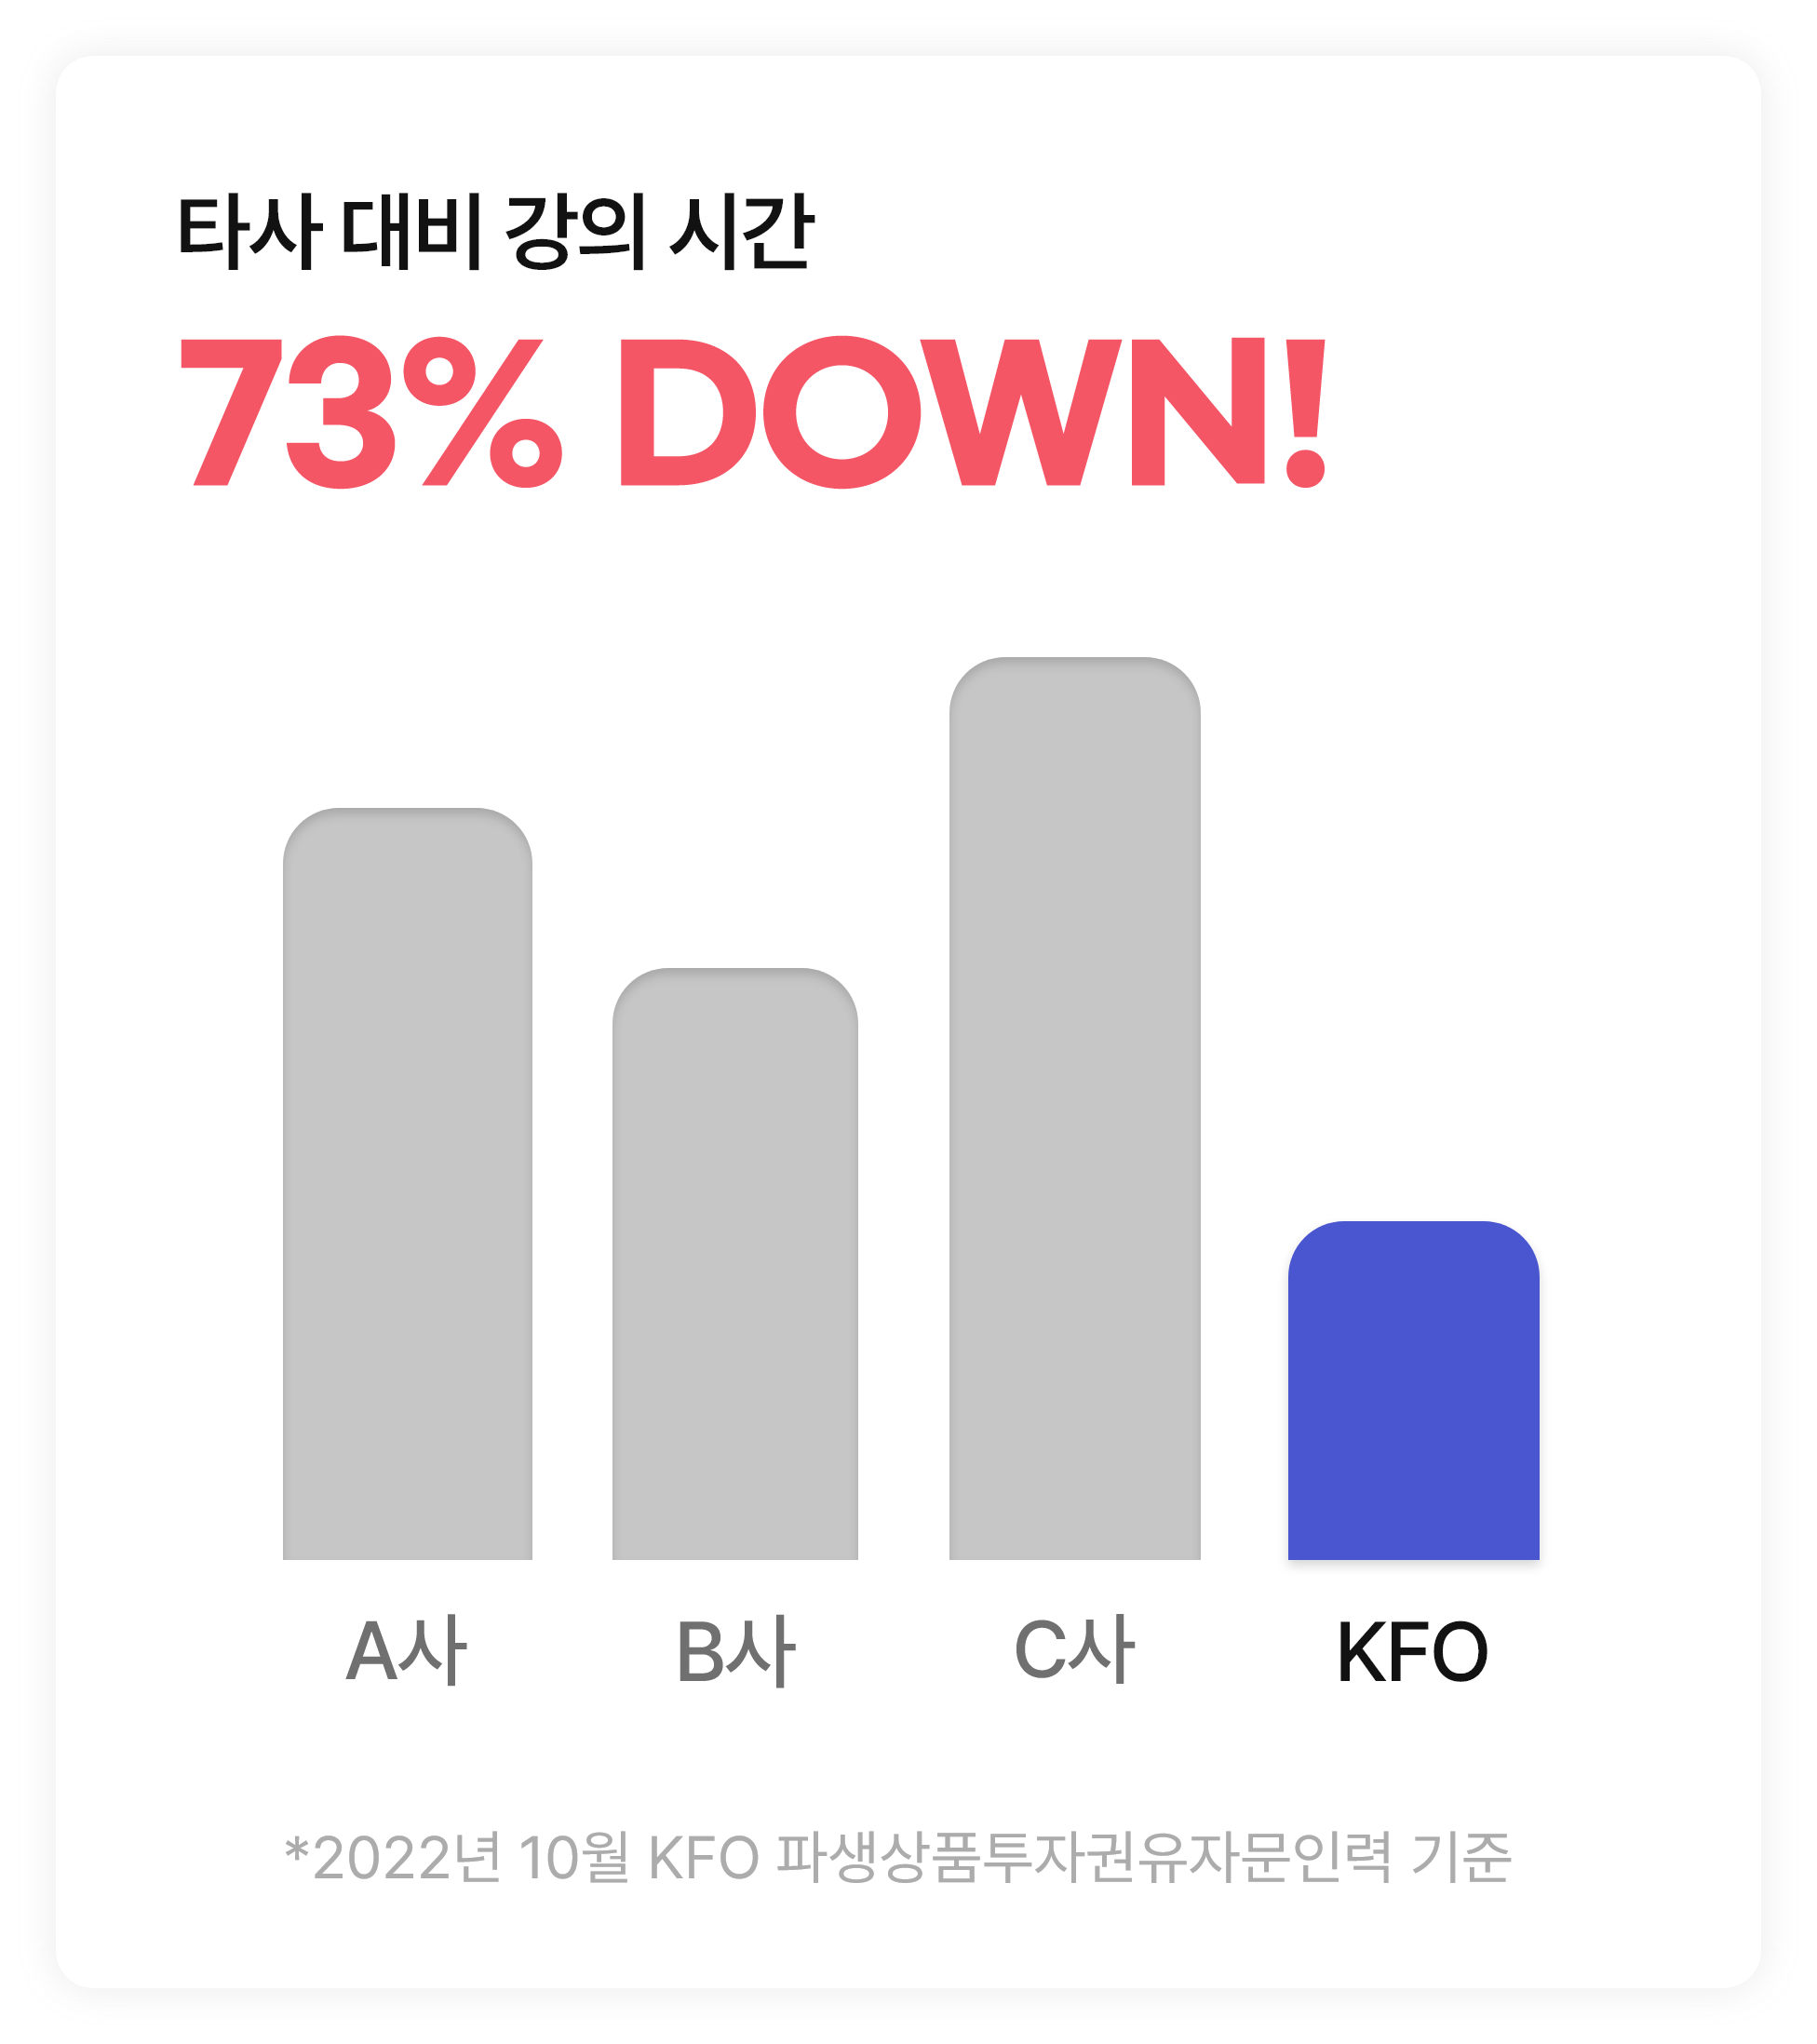 Ÿ�� ��� ���� �ð� 73% down(2022�� 10�� kfo �Ļ���ǰ���ڱ����ڹ��η� ����)